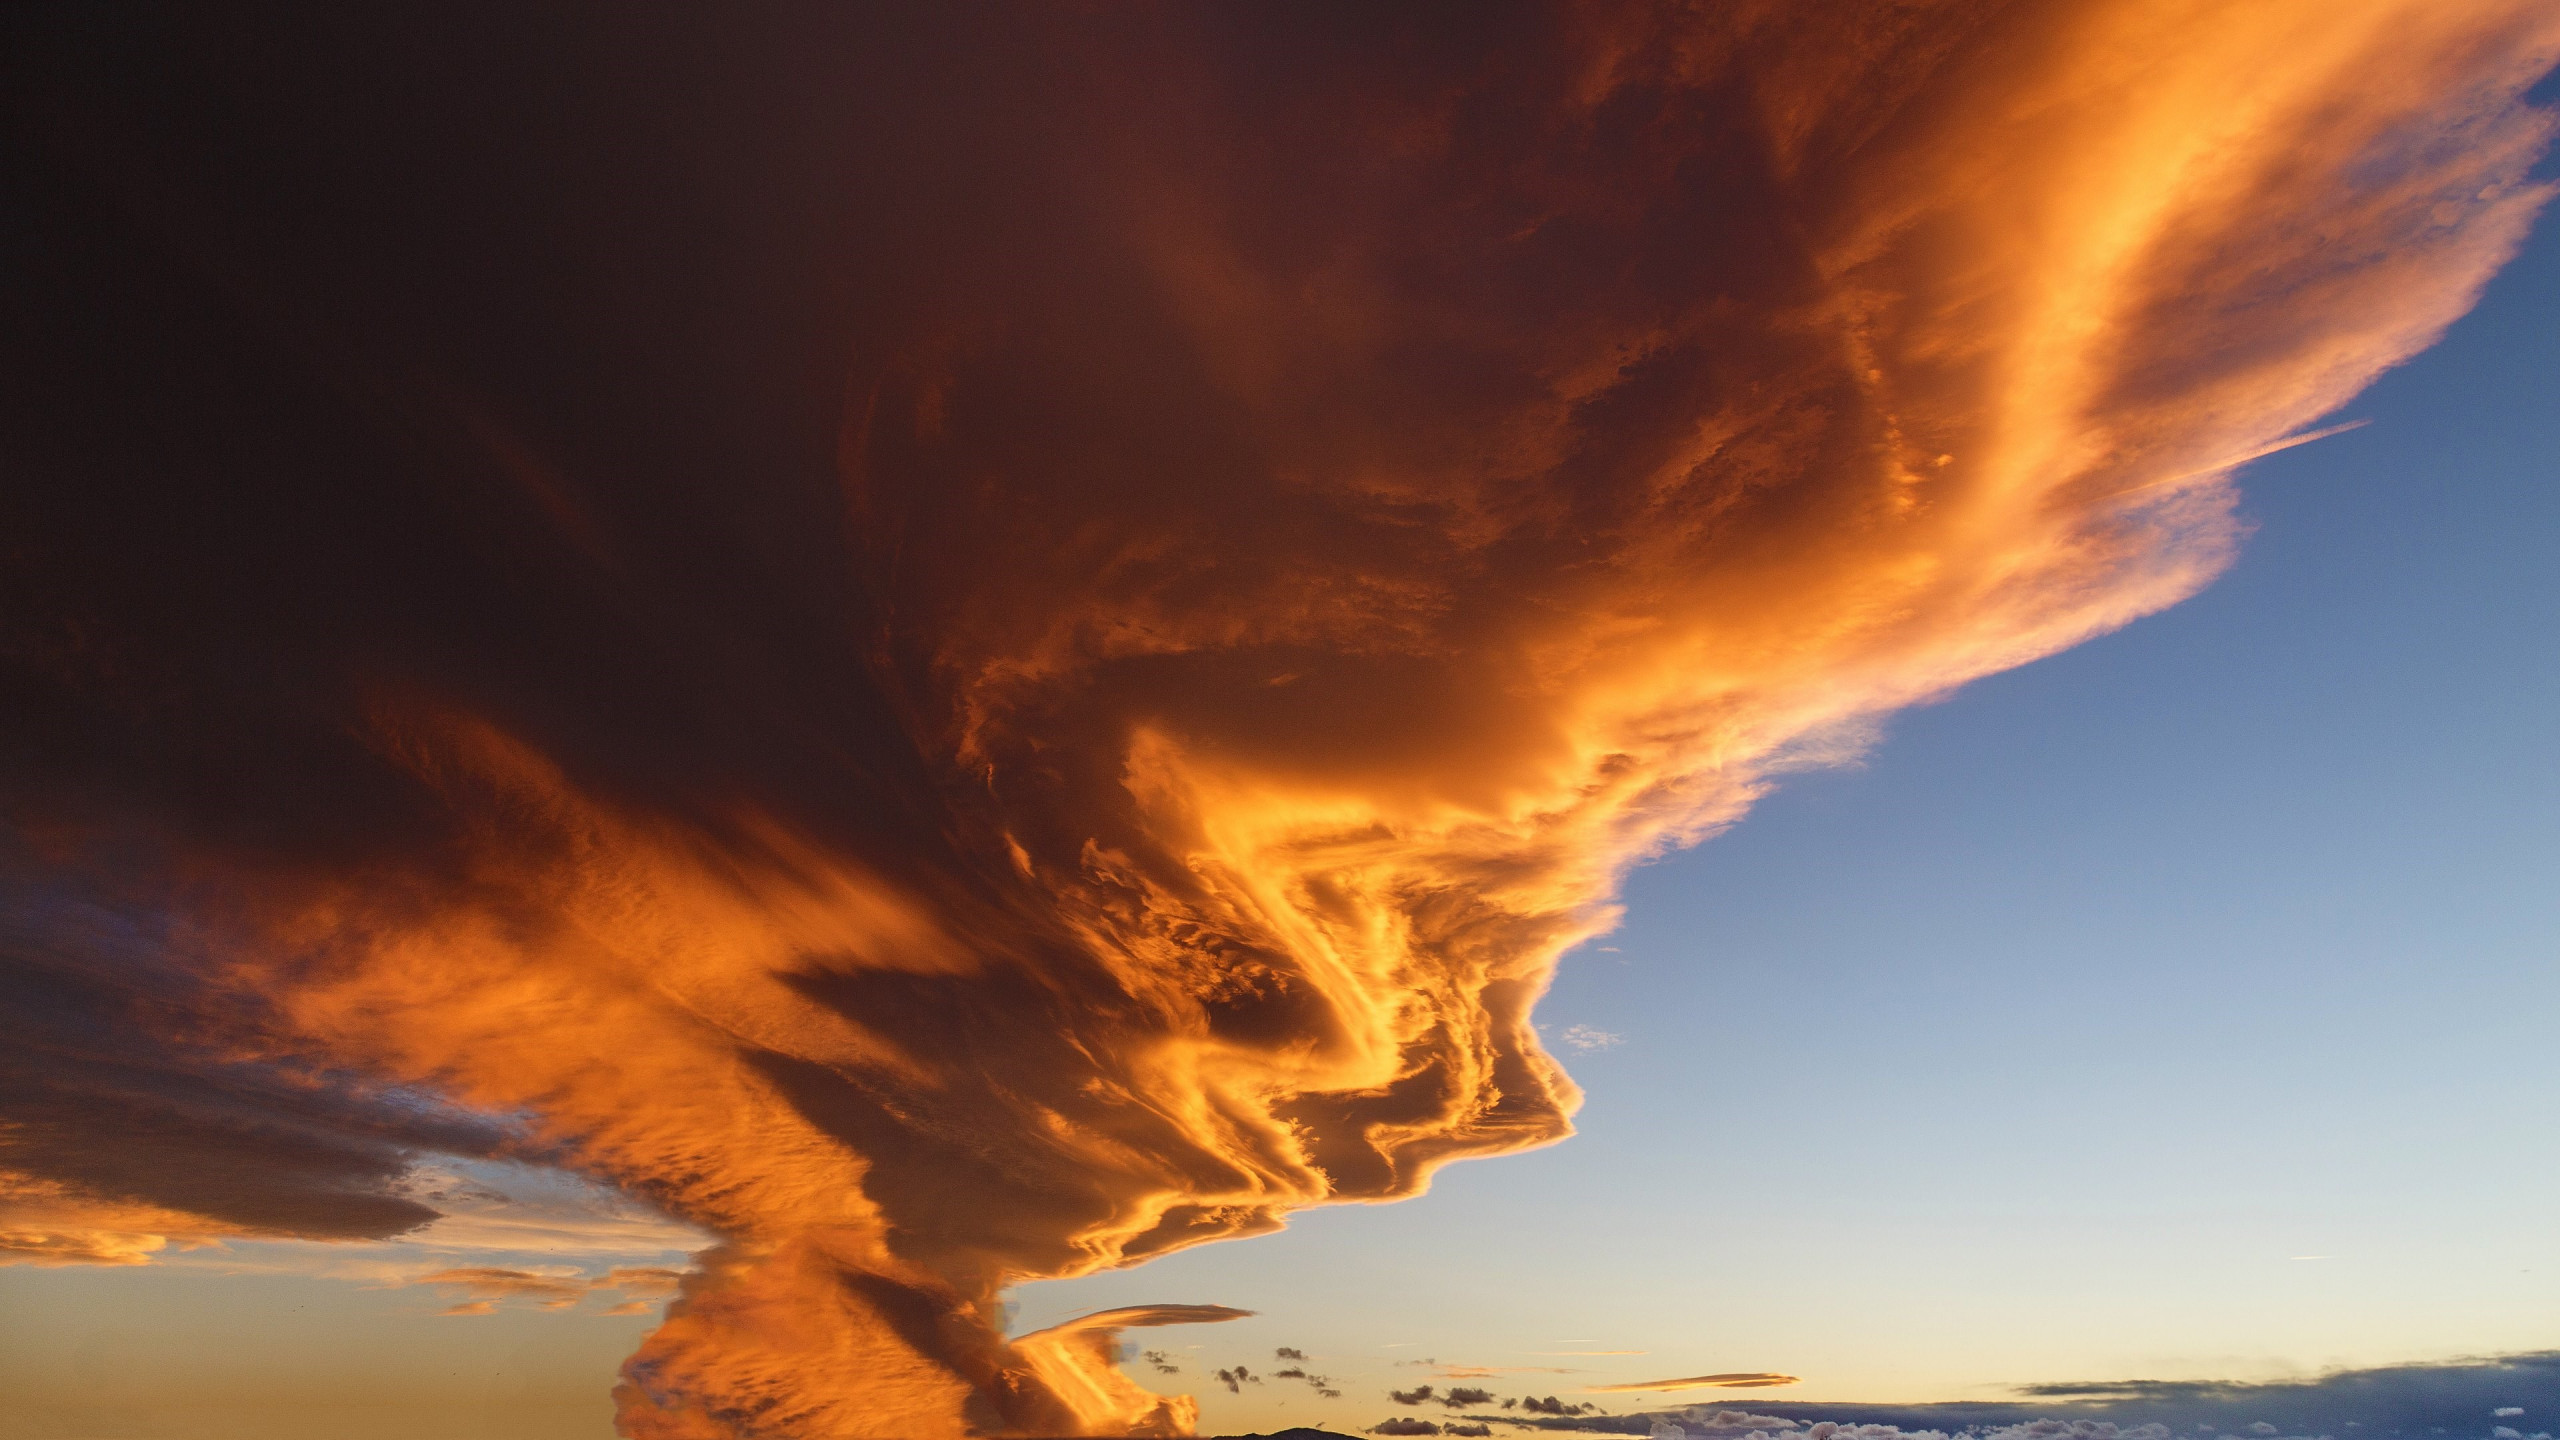 Clouds of fire wallpaper 2560x1440